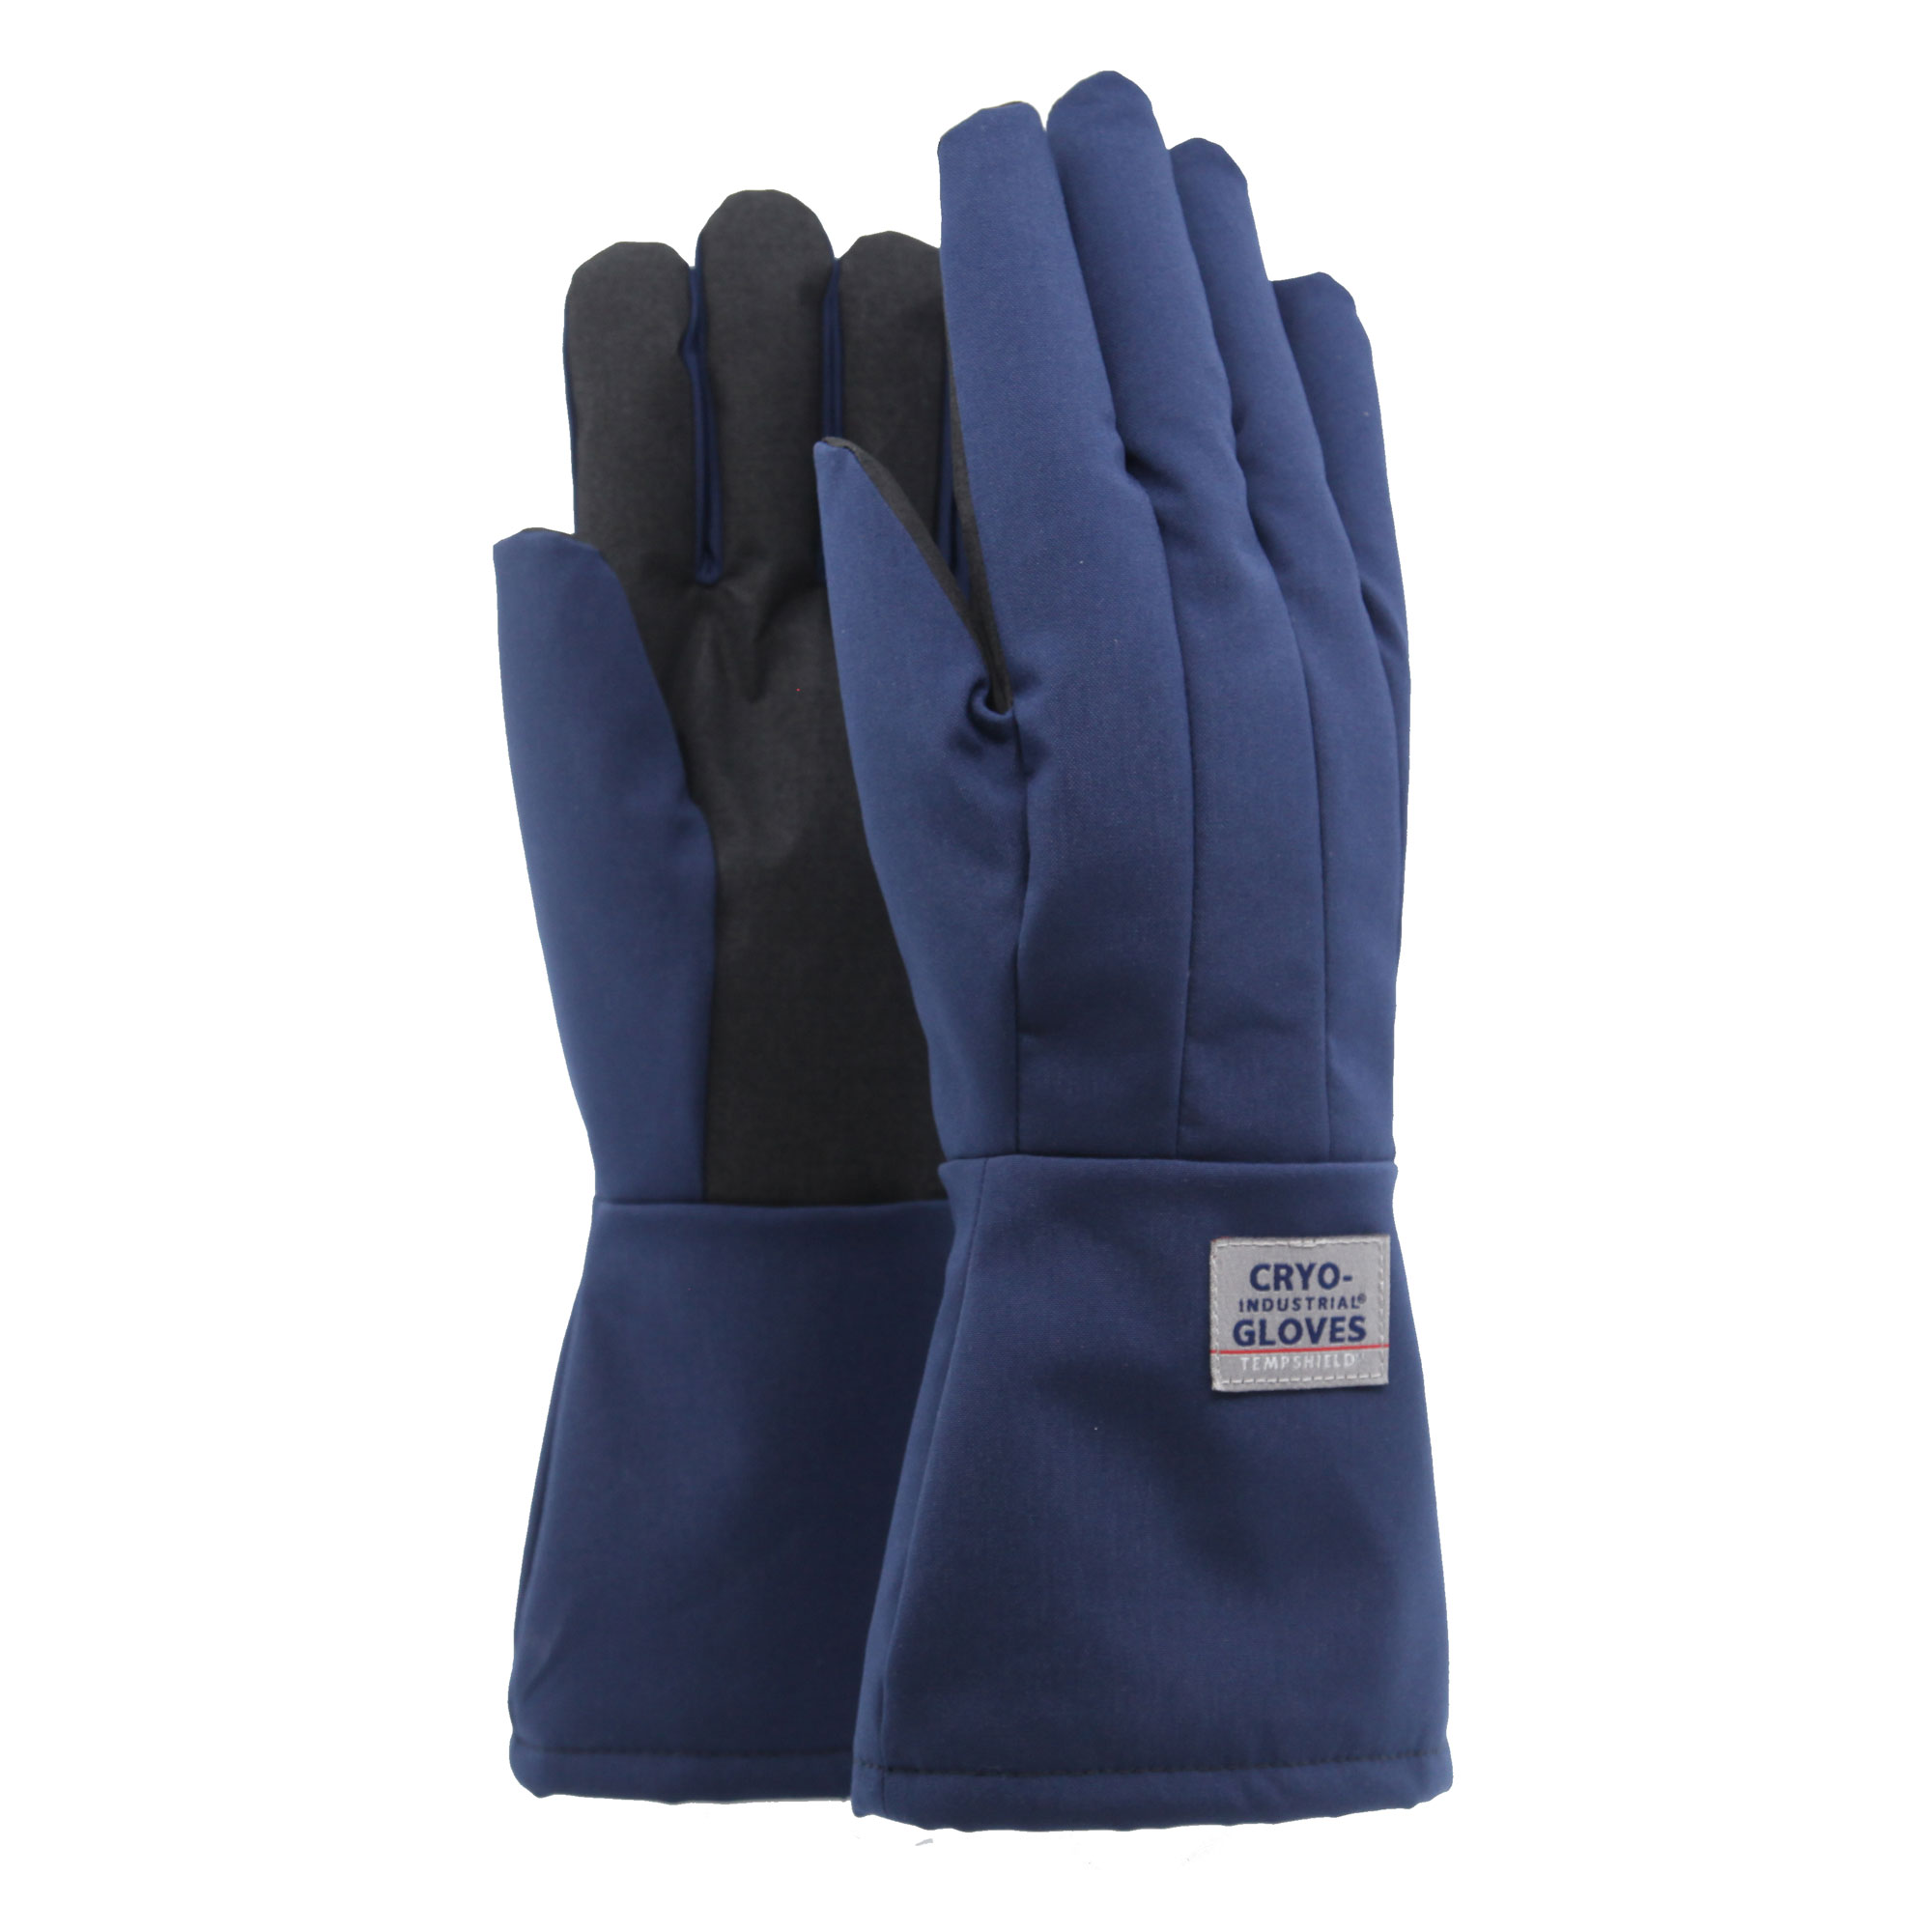 Cryo-Industrial Gloves Mid-Arm - L